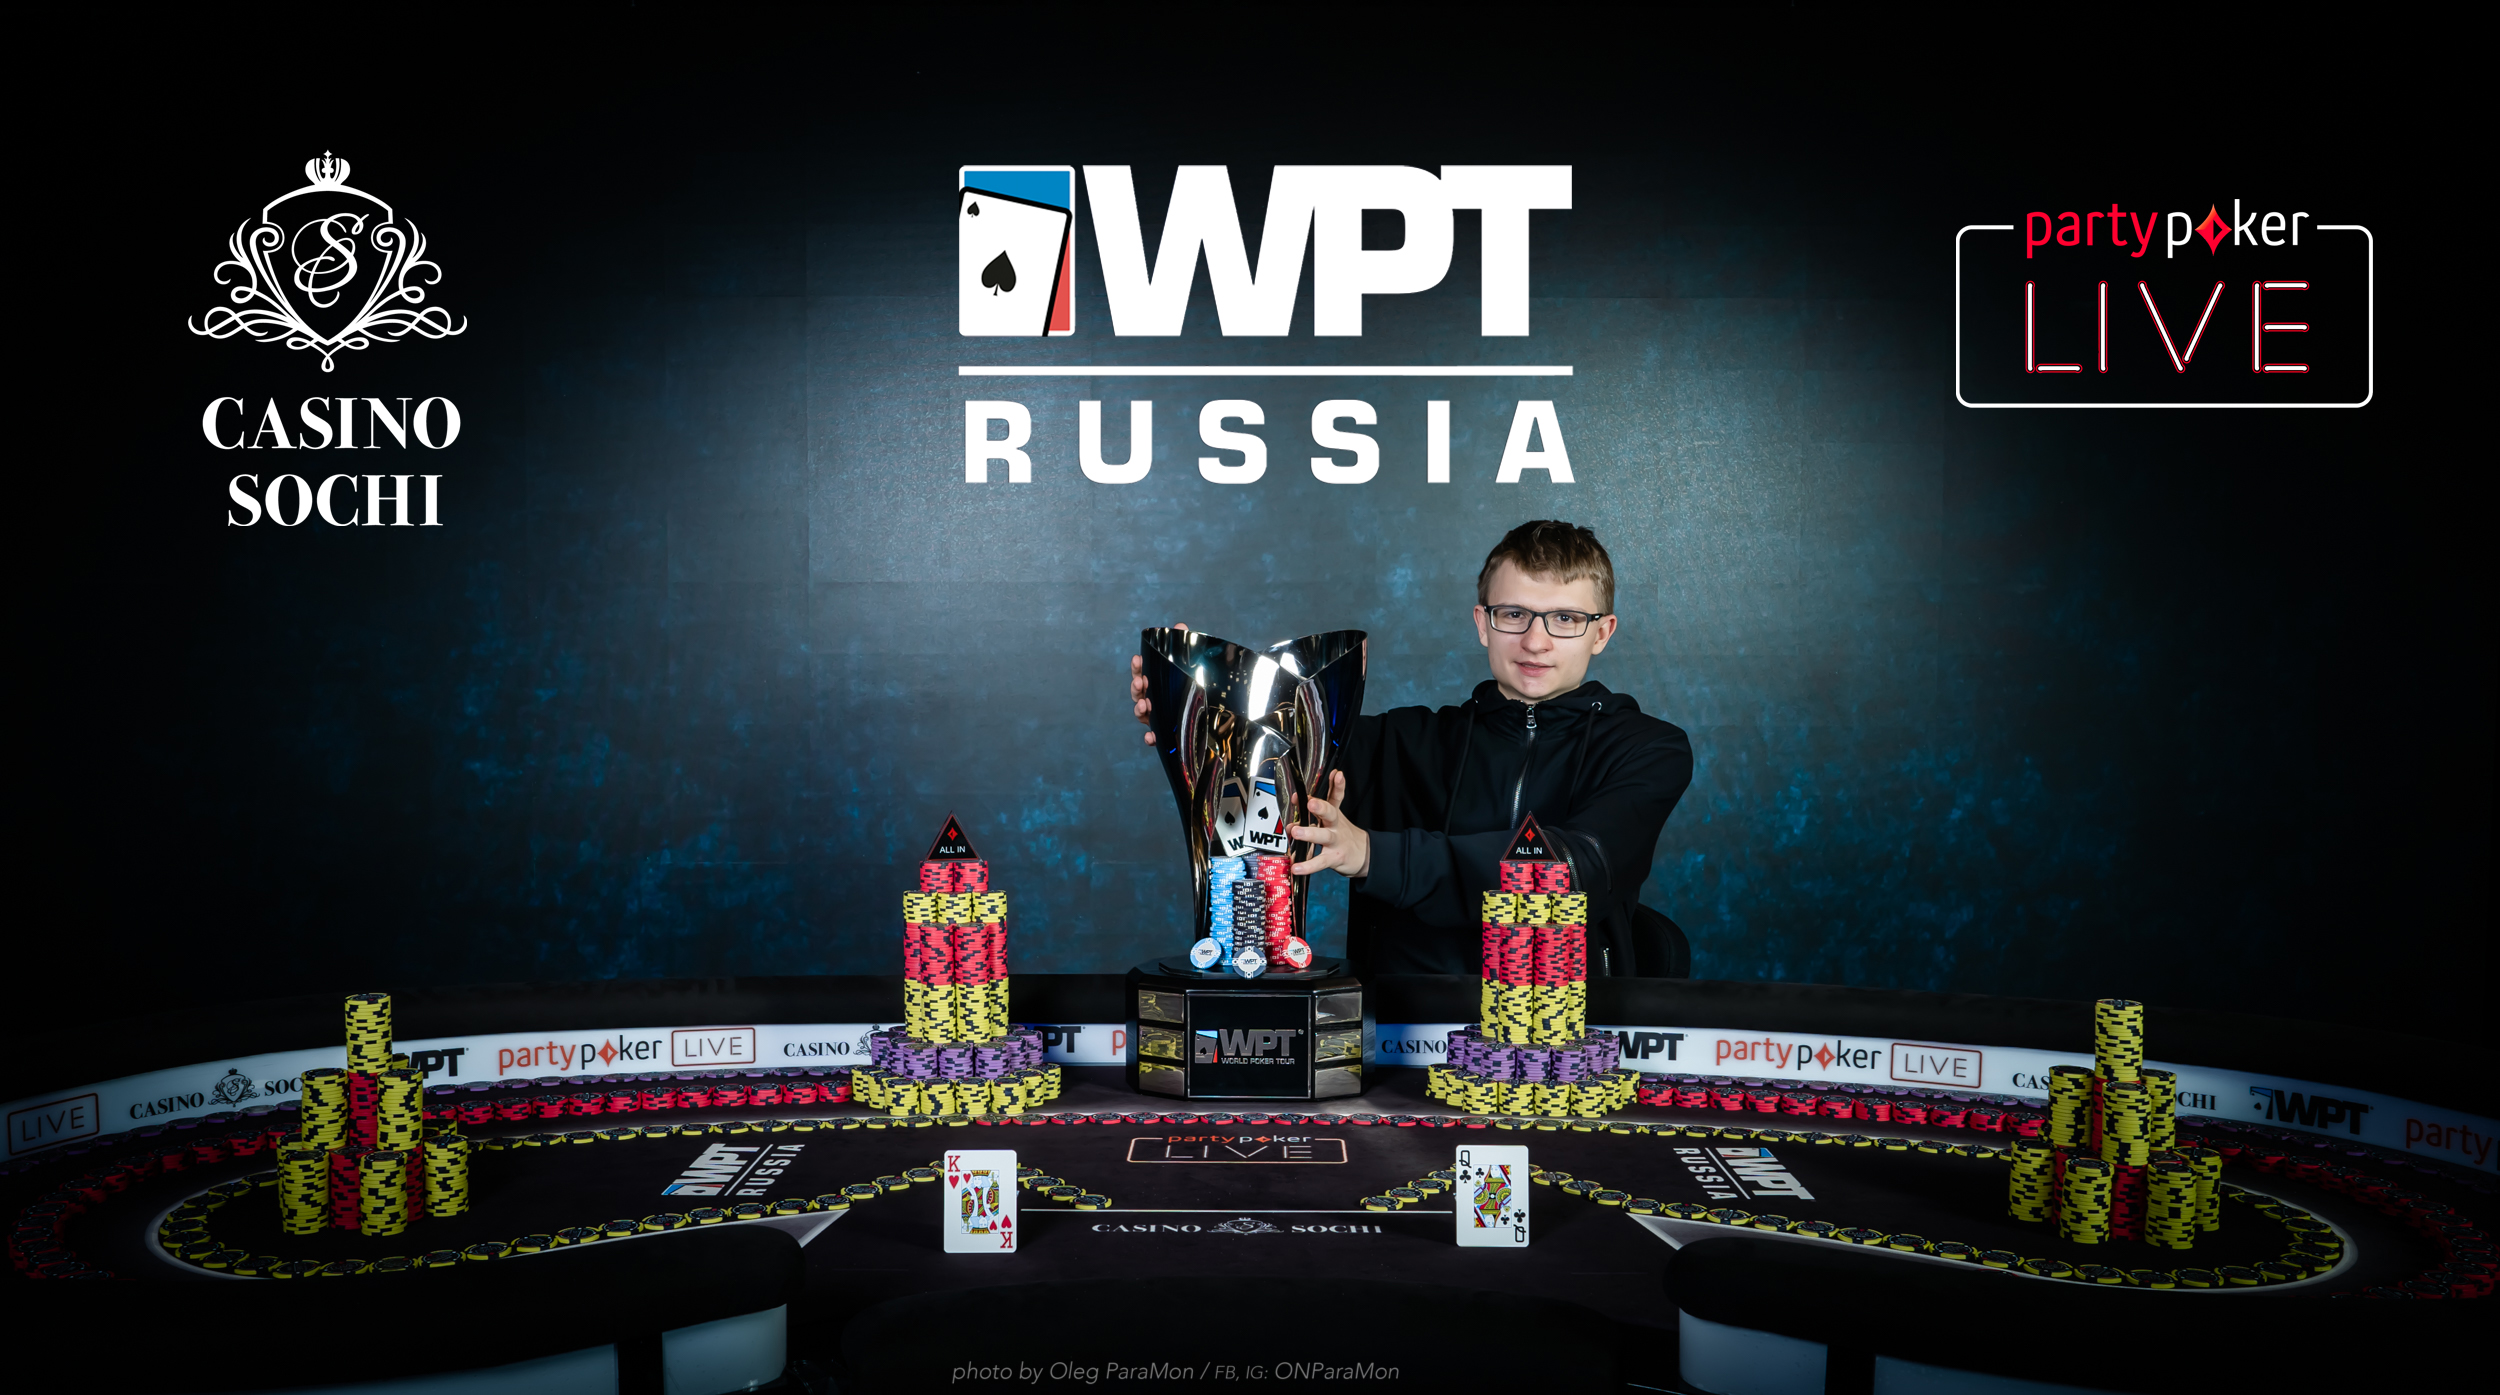 Dominant Display Makes Maksim Sekretarev WPT Russia Champion